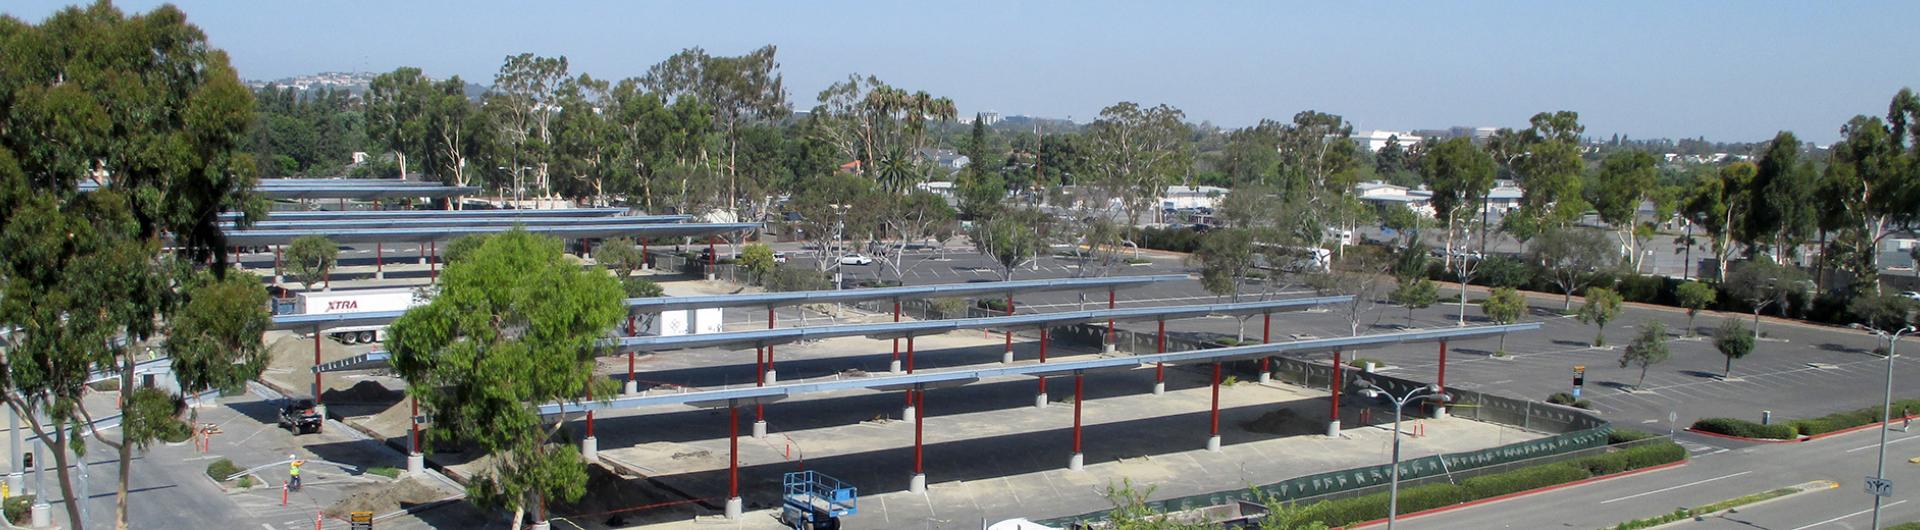 Solar panels in parking lot 14